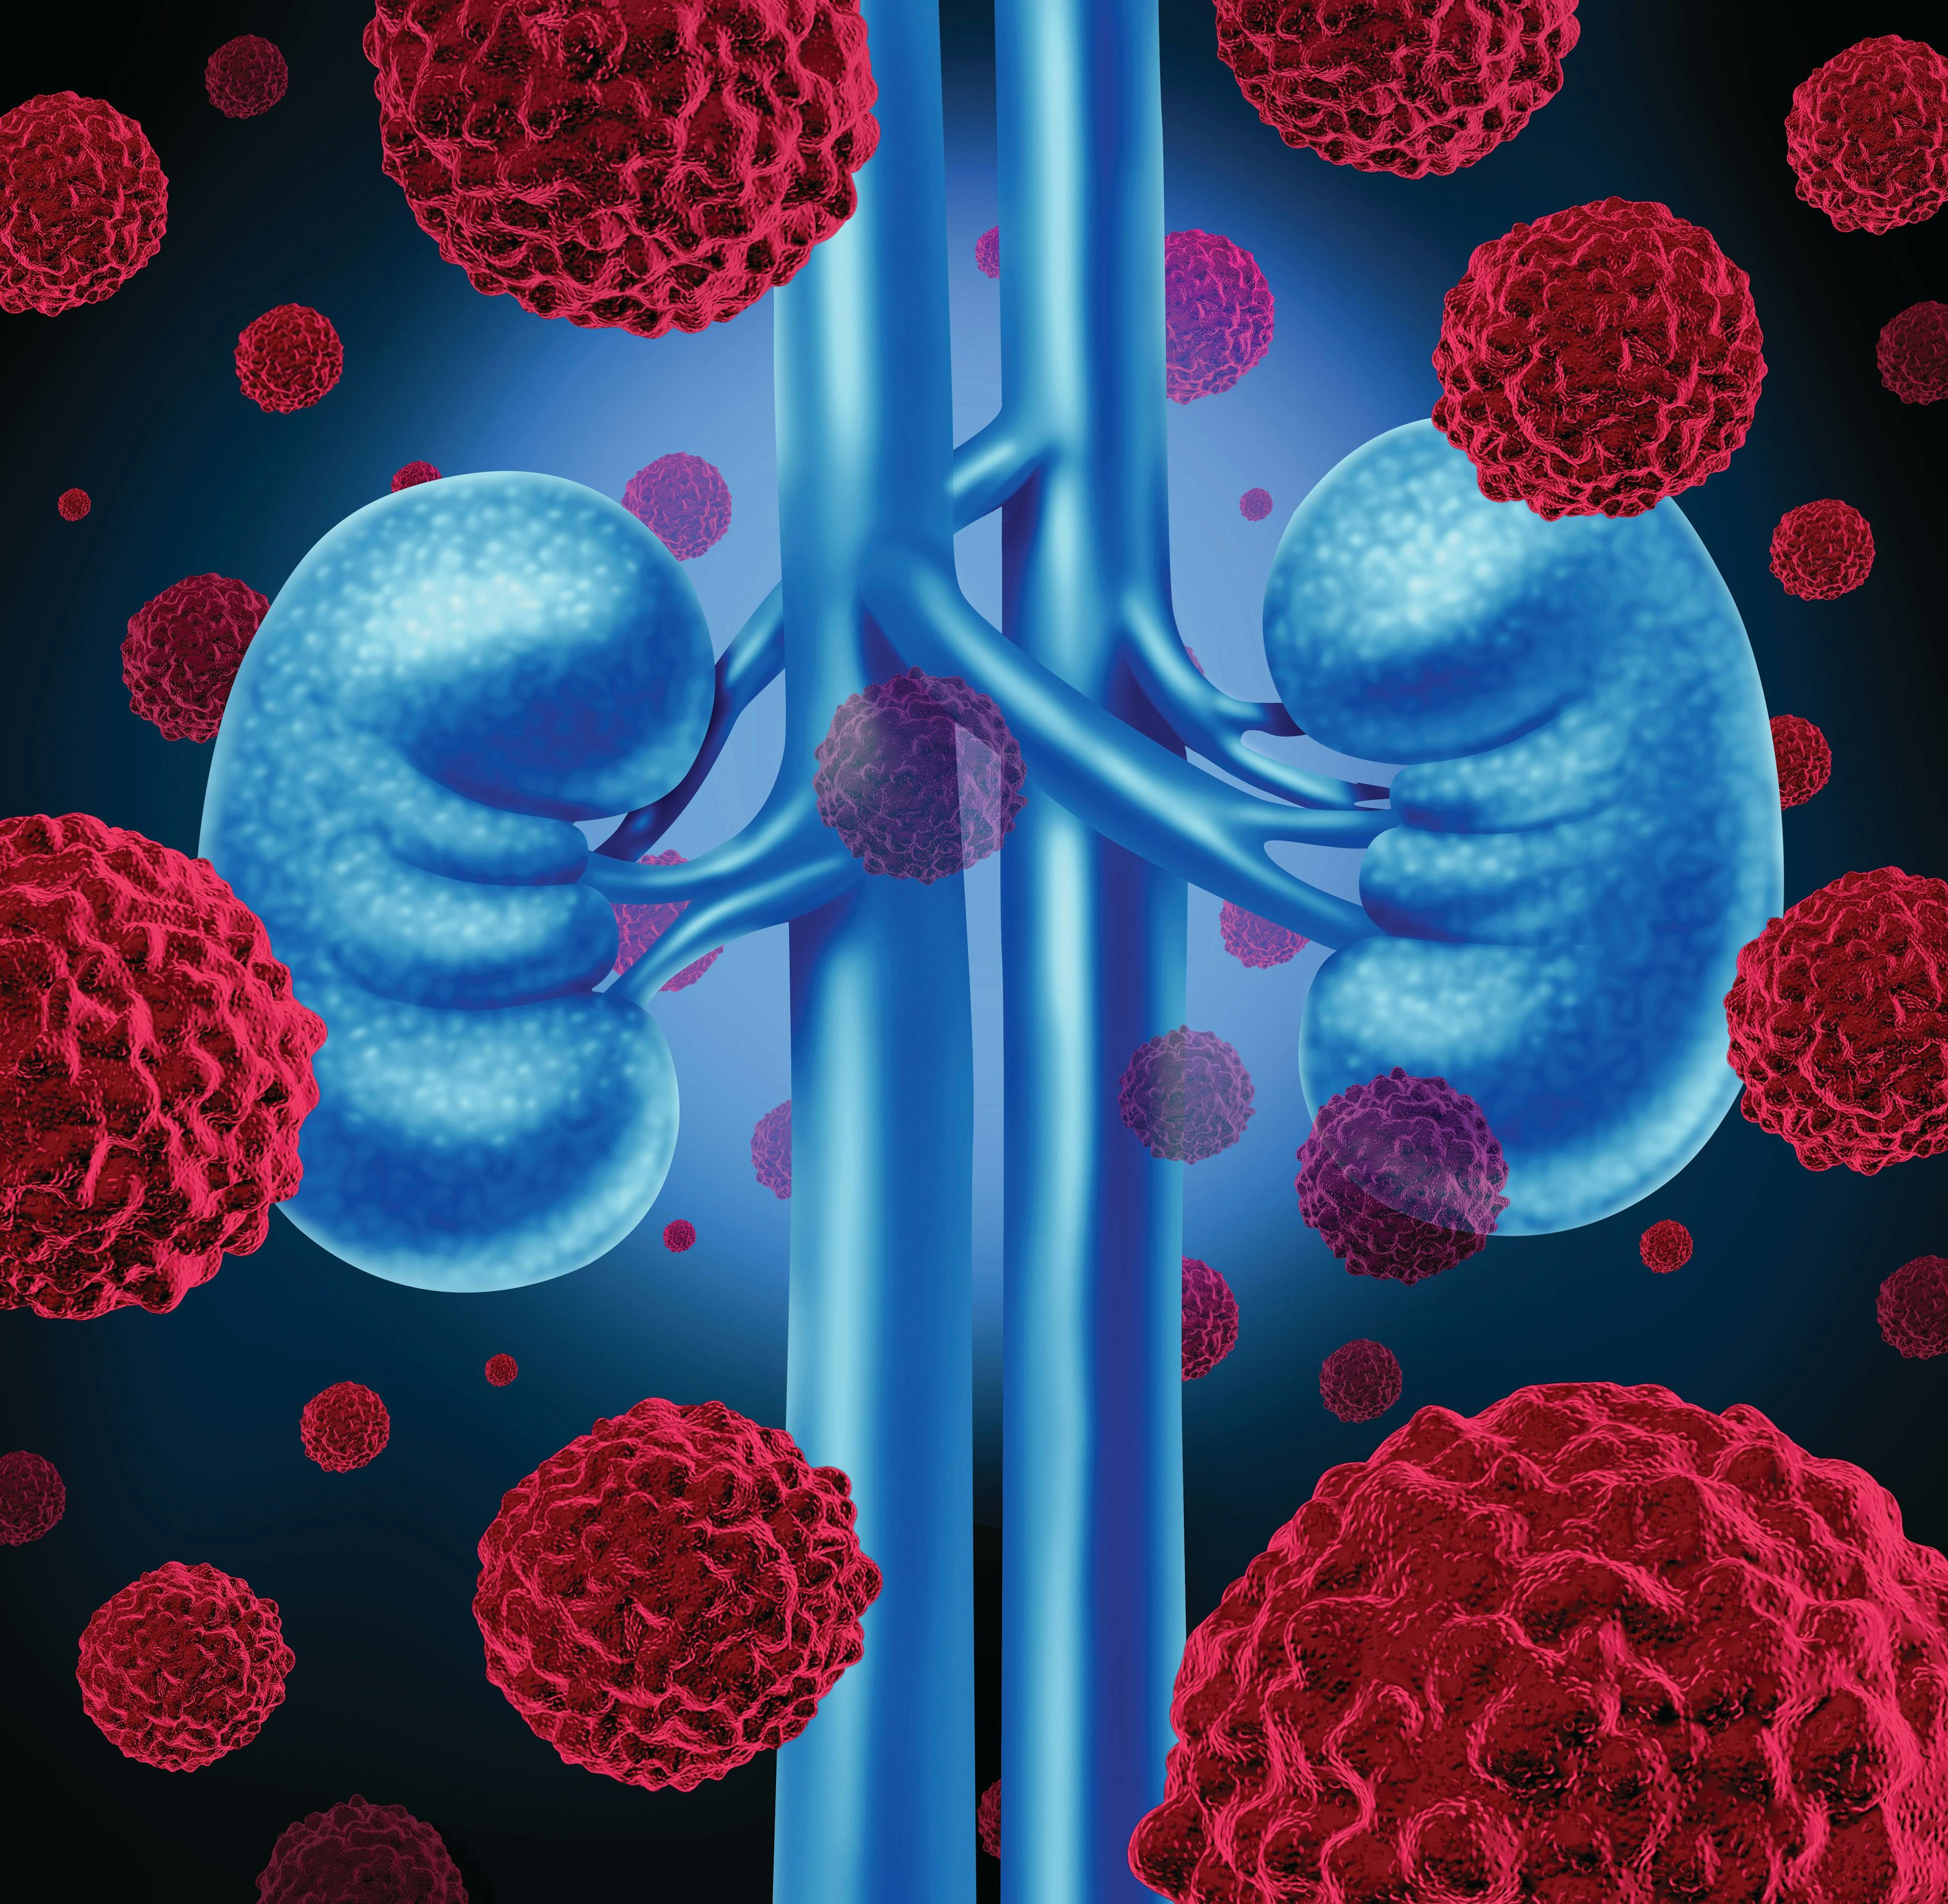 Illustration of kidneys with cancer cells - stock.adobe.com